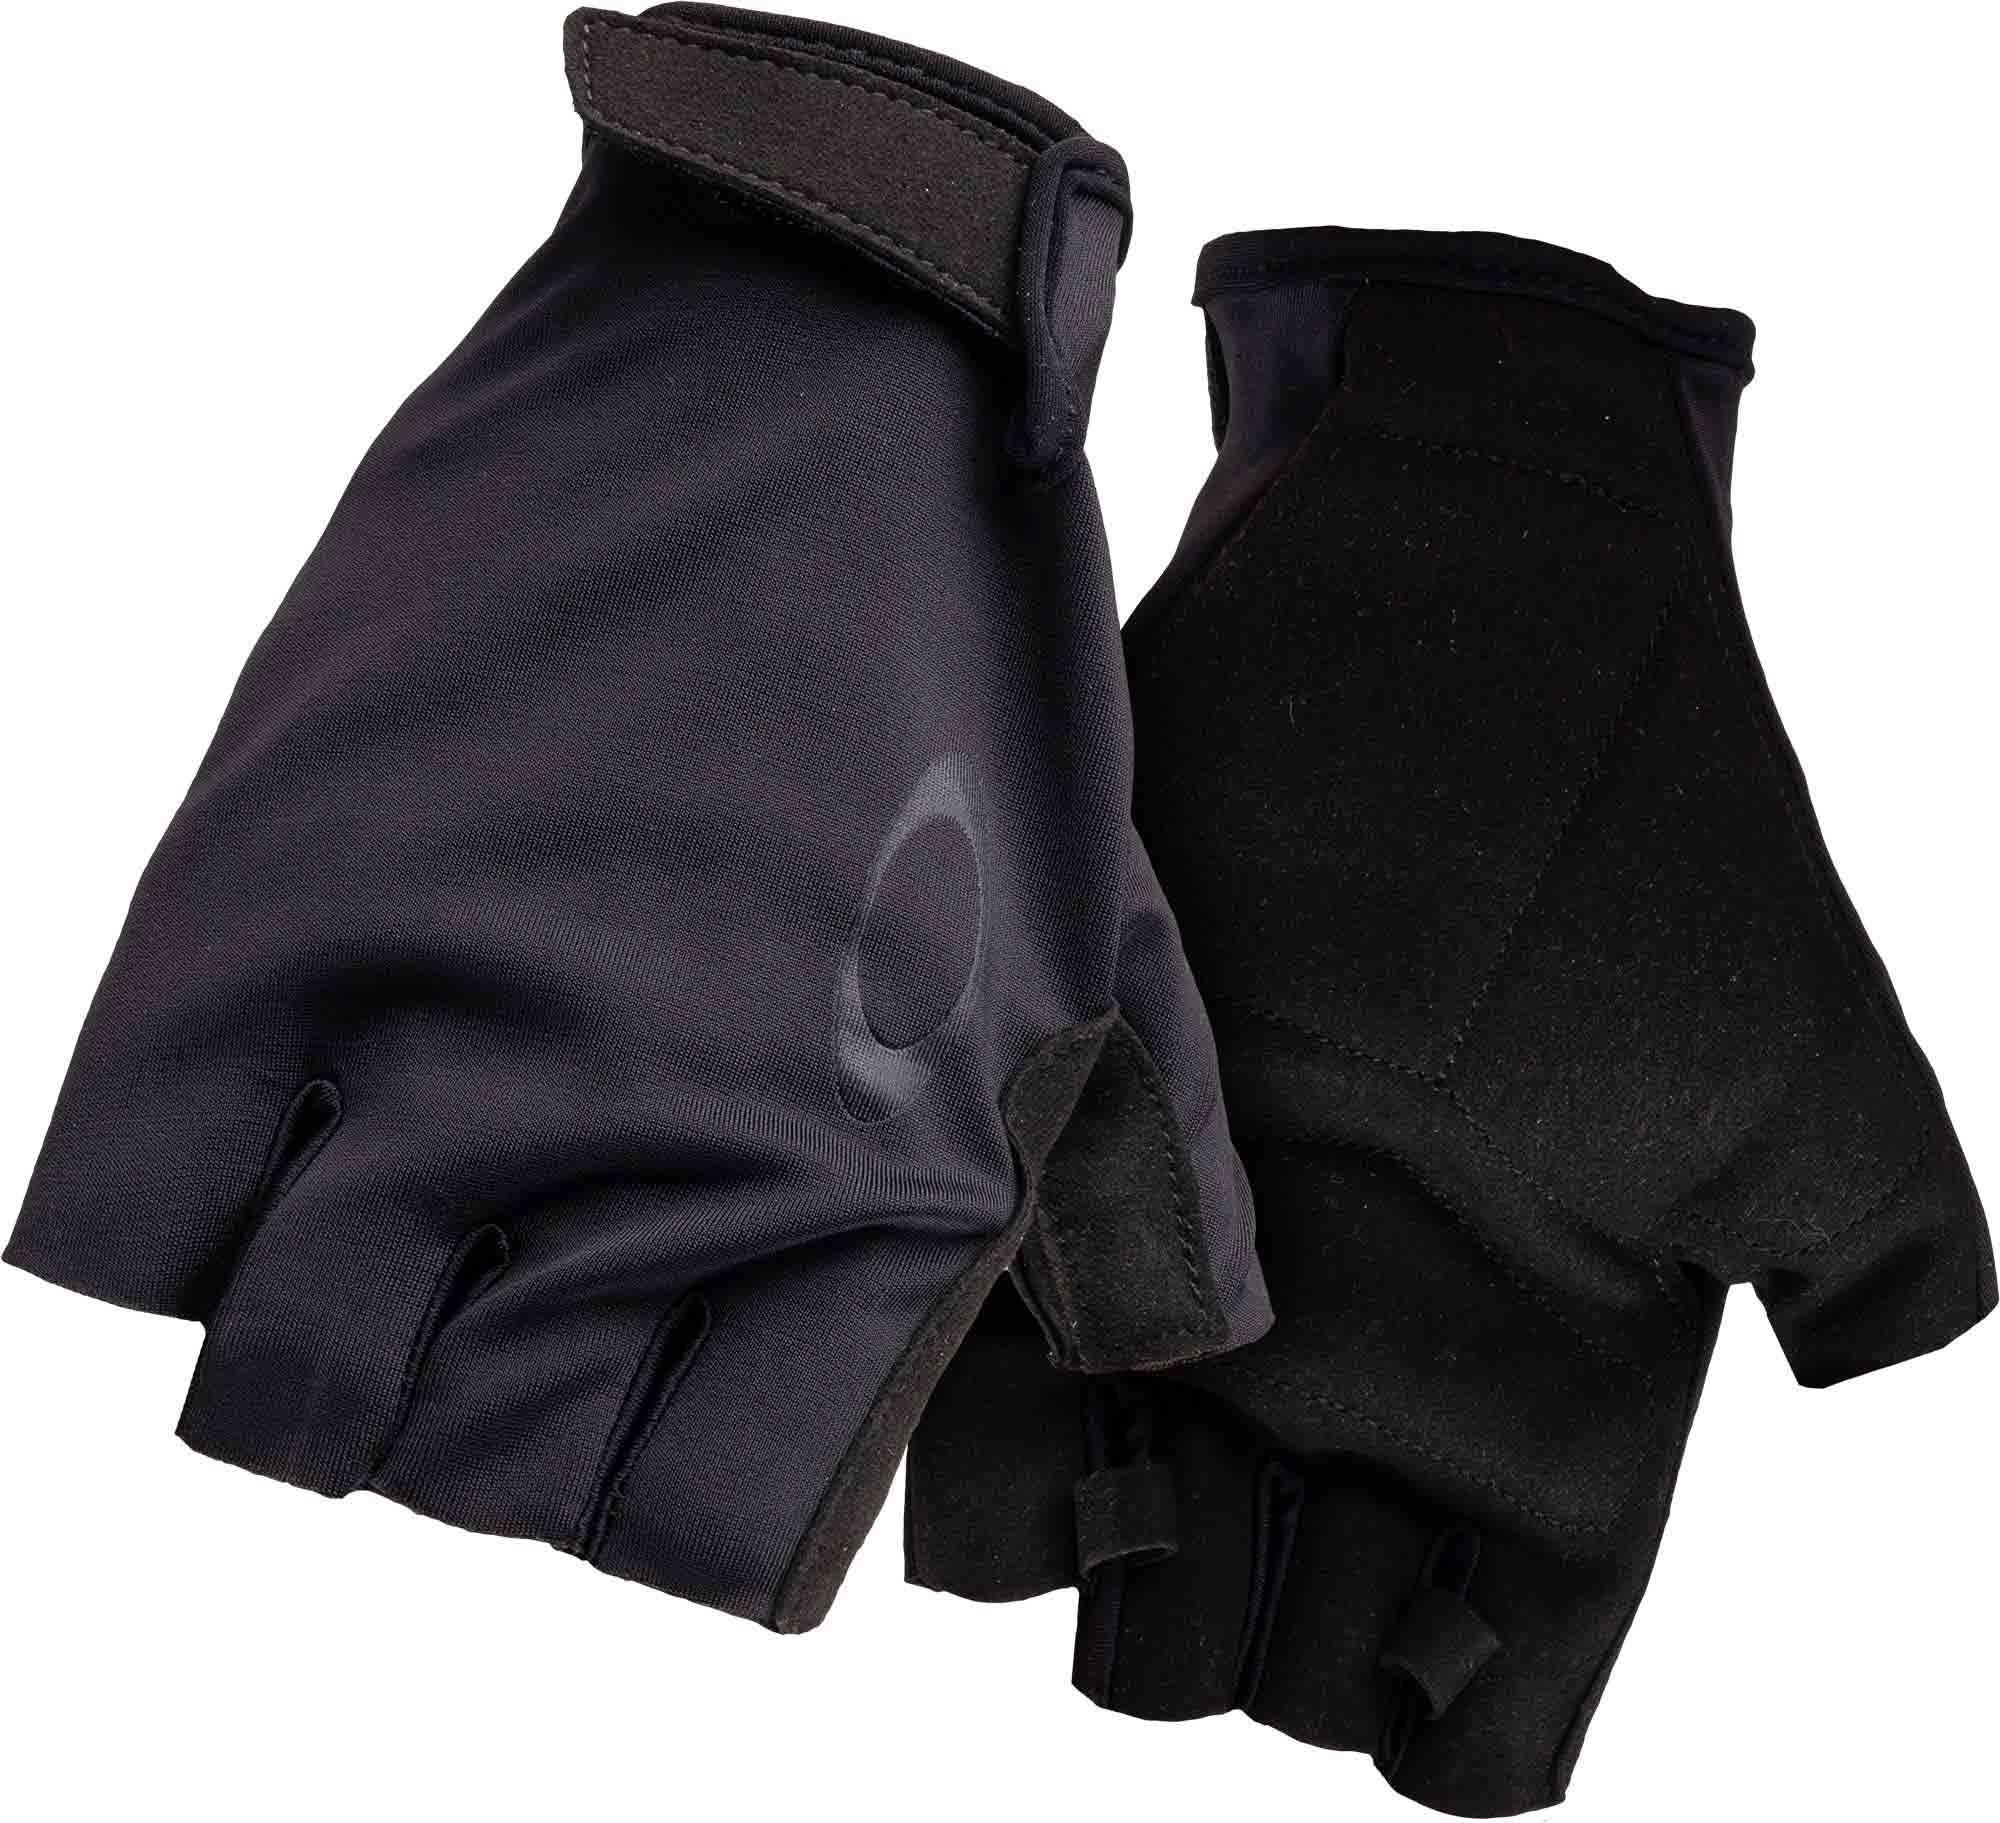 Cyclist gloves